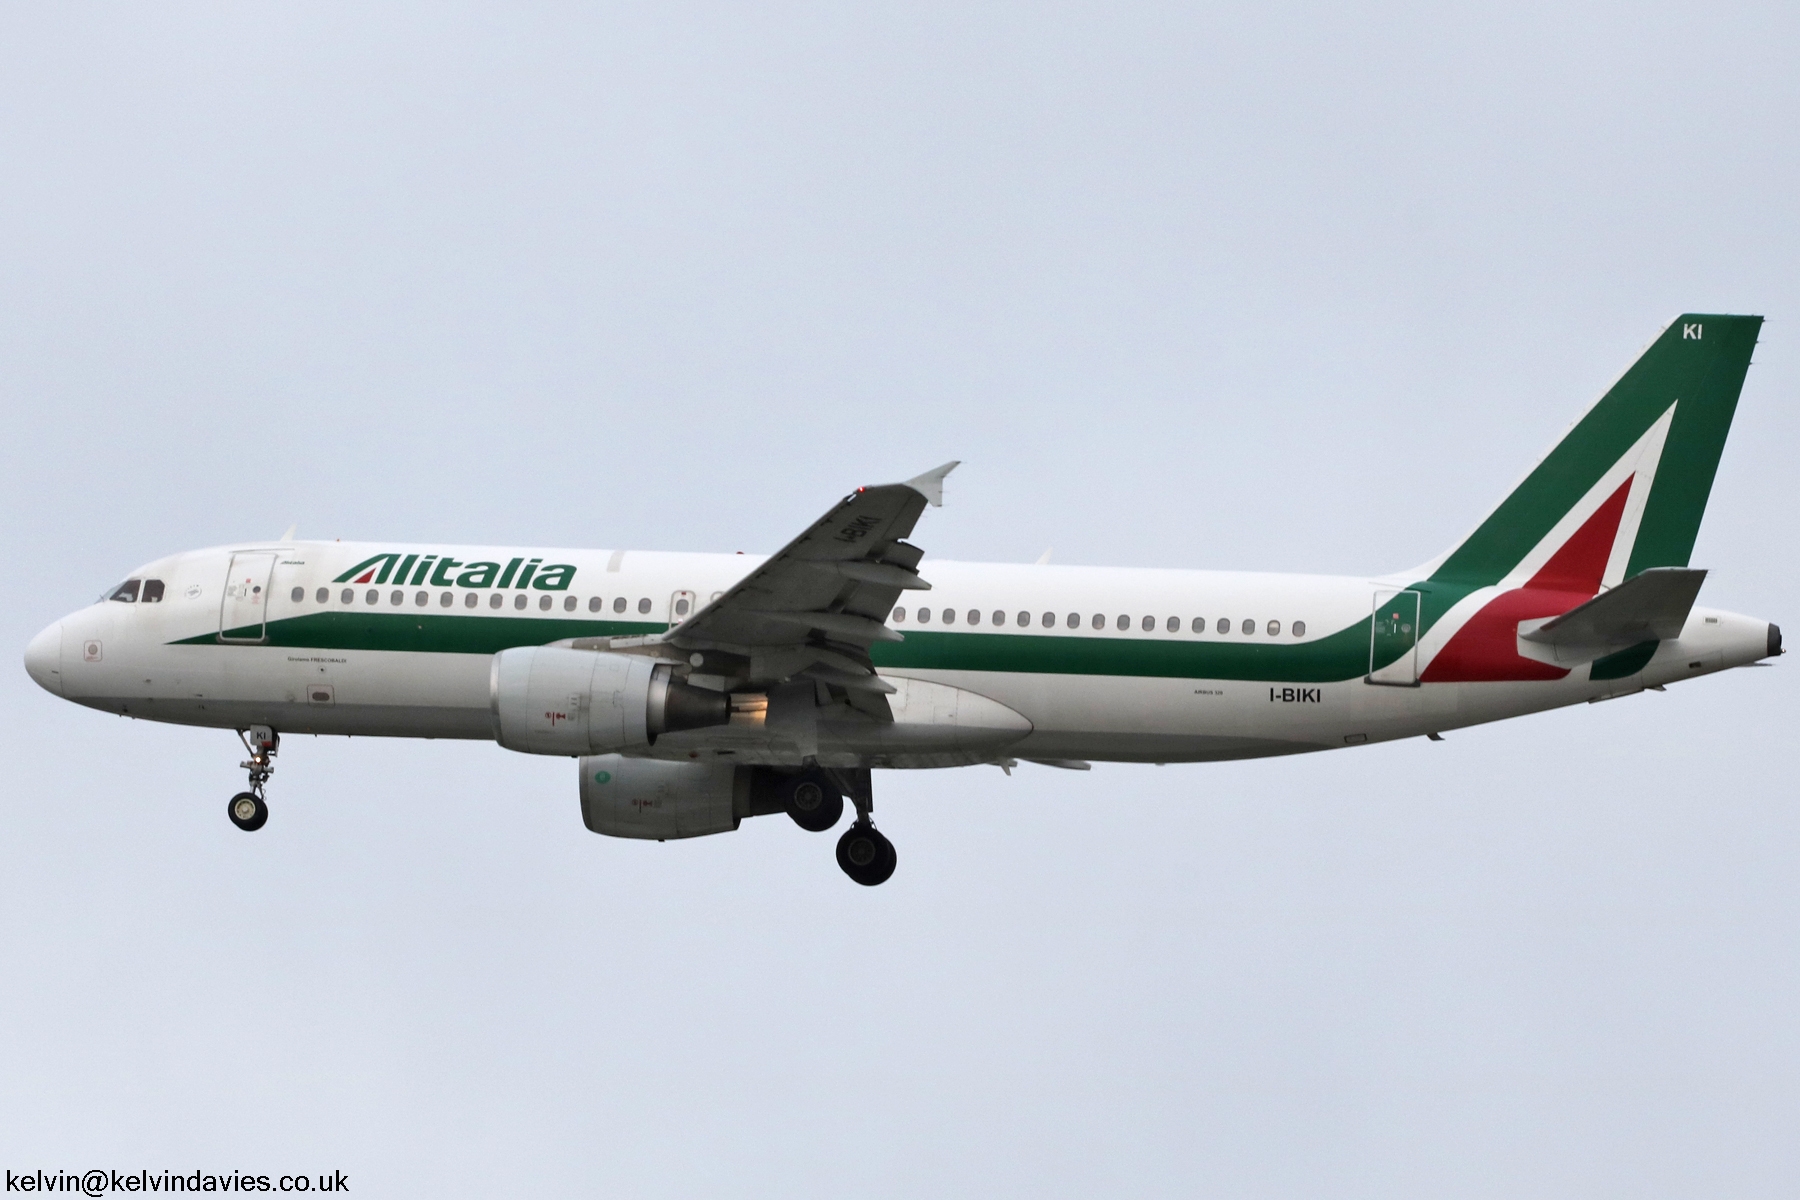 Alitalia A320 I-BIKI